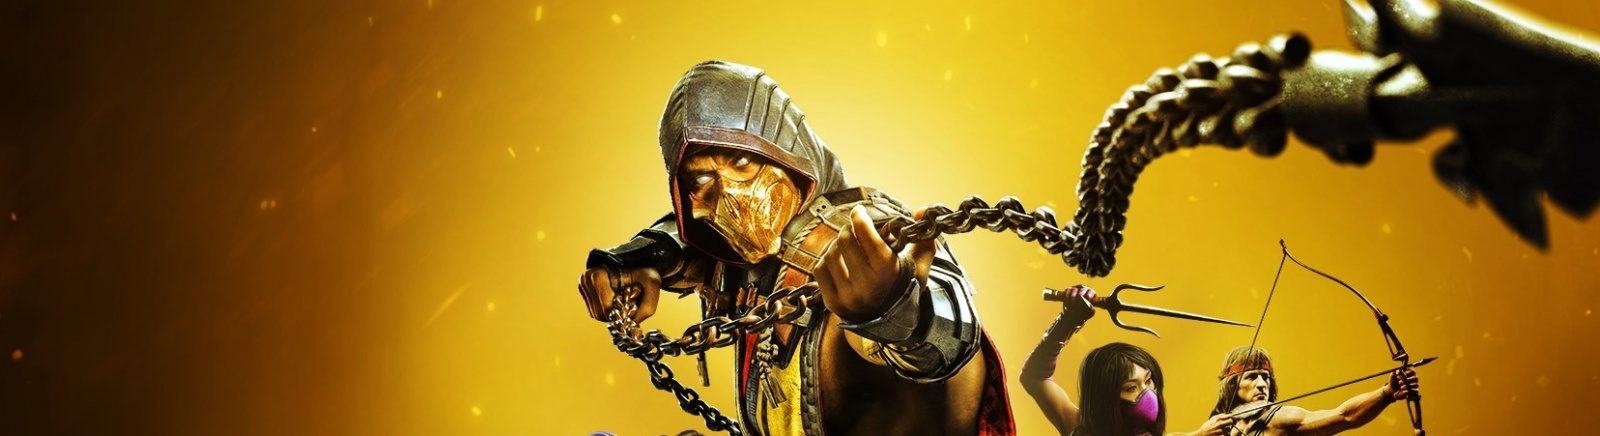 Дата выхода Mortal Kombat 11 Ultimate  на PC, PS5 и Xbox Series X/S в России и во всем мире